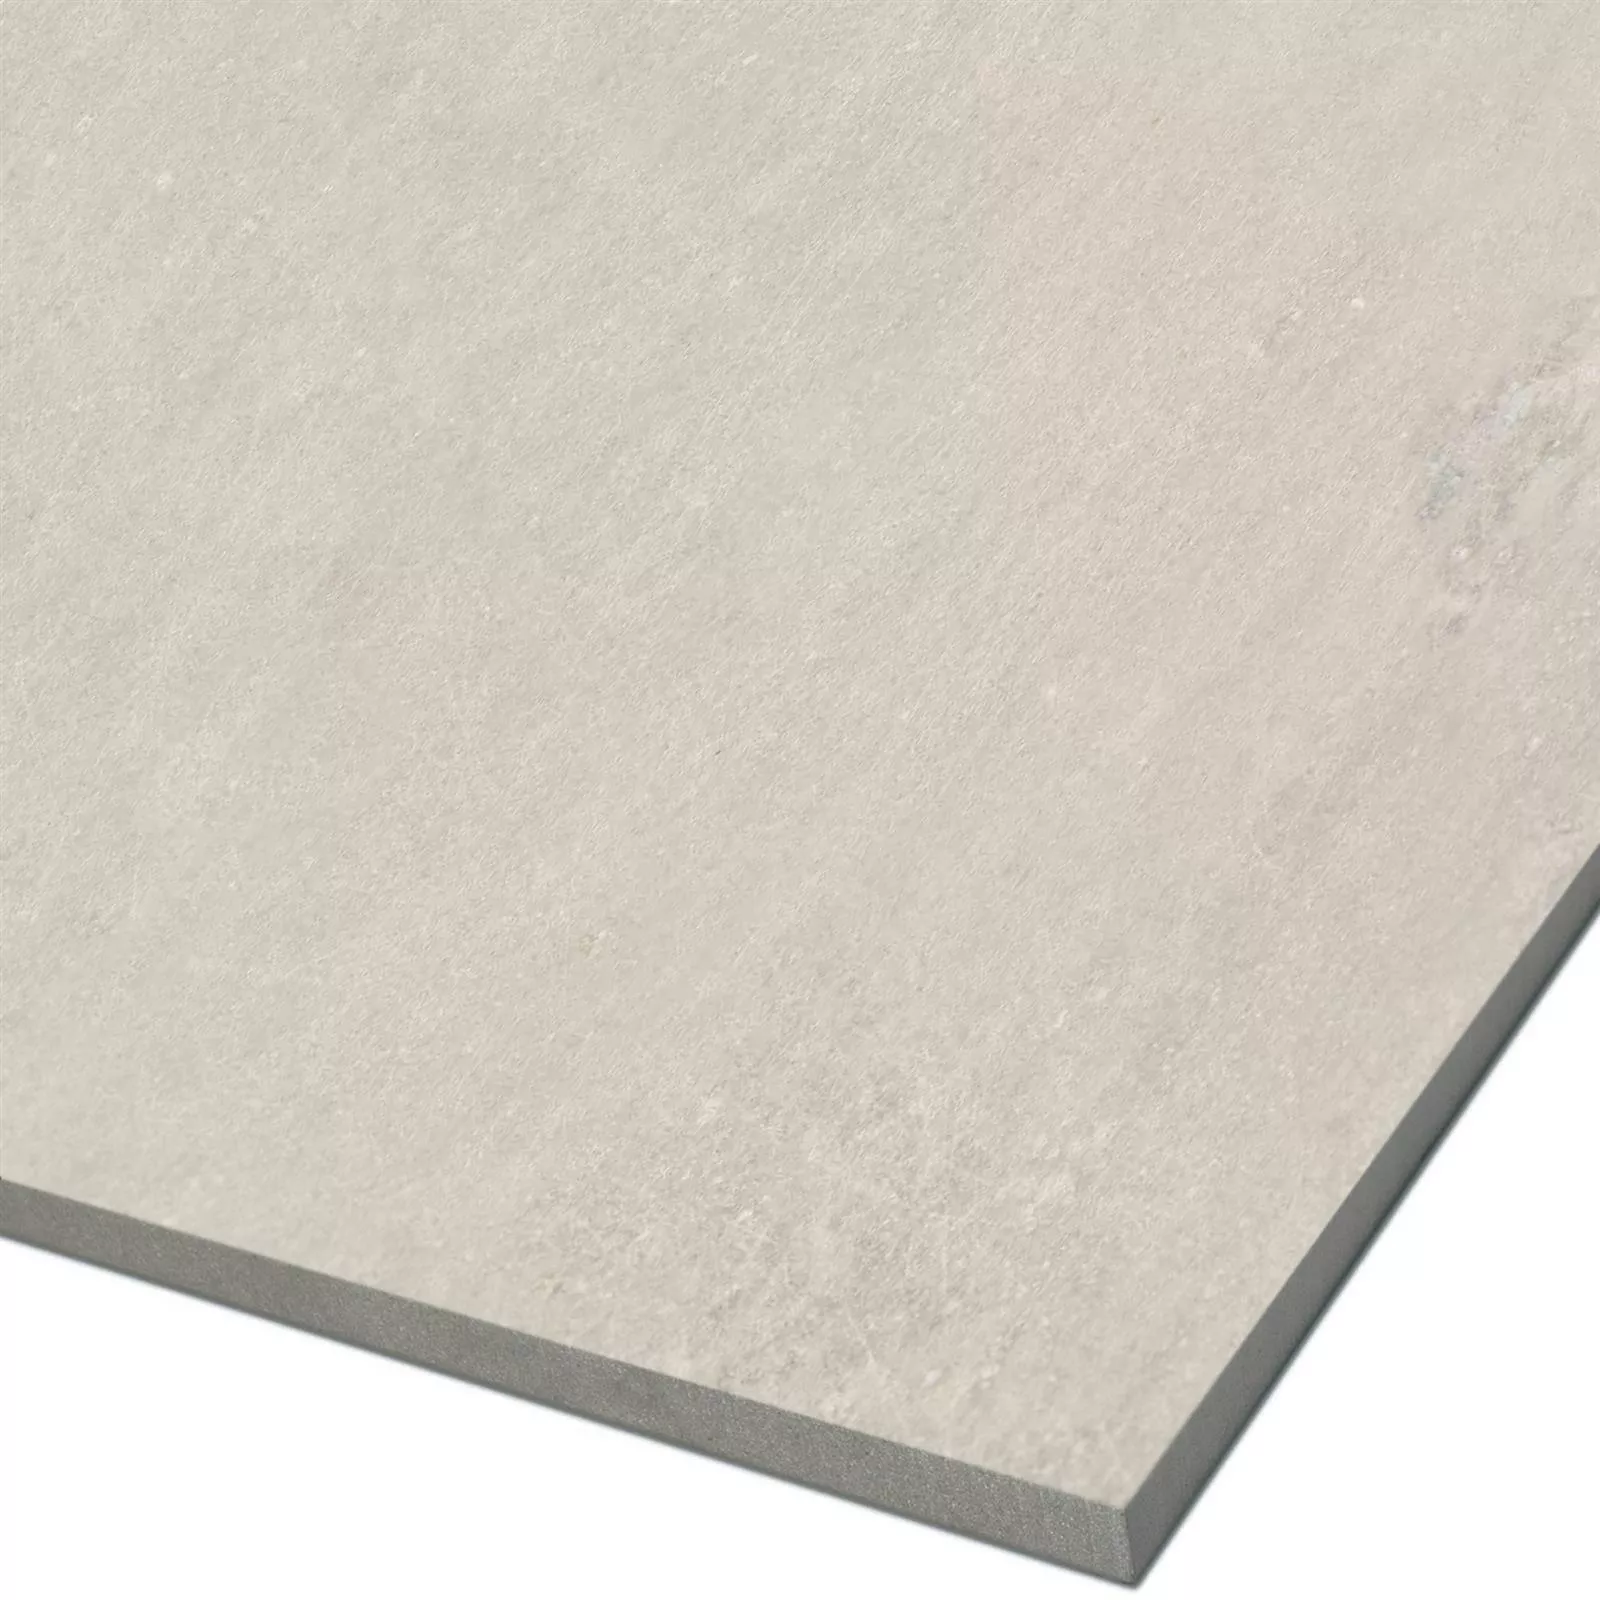 Sample Floor Tiles Peaceway Ivory 30x60cm